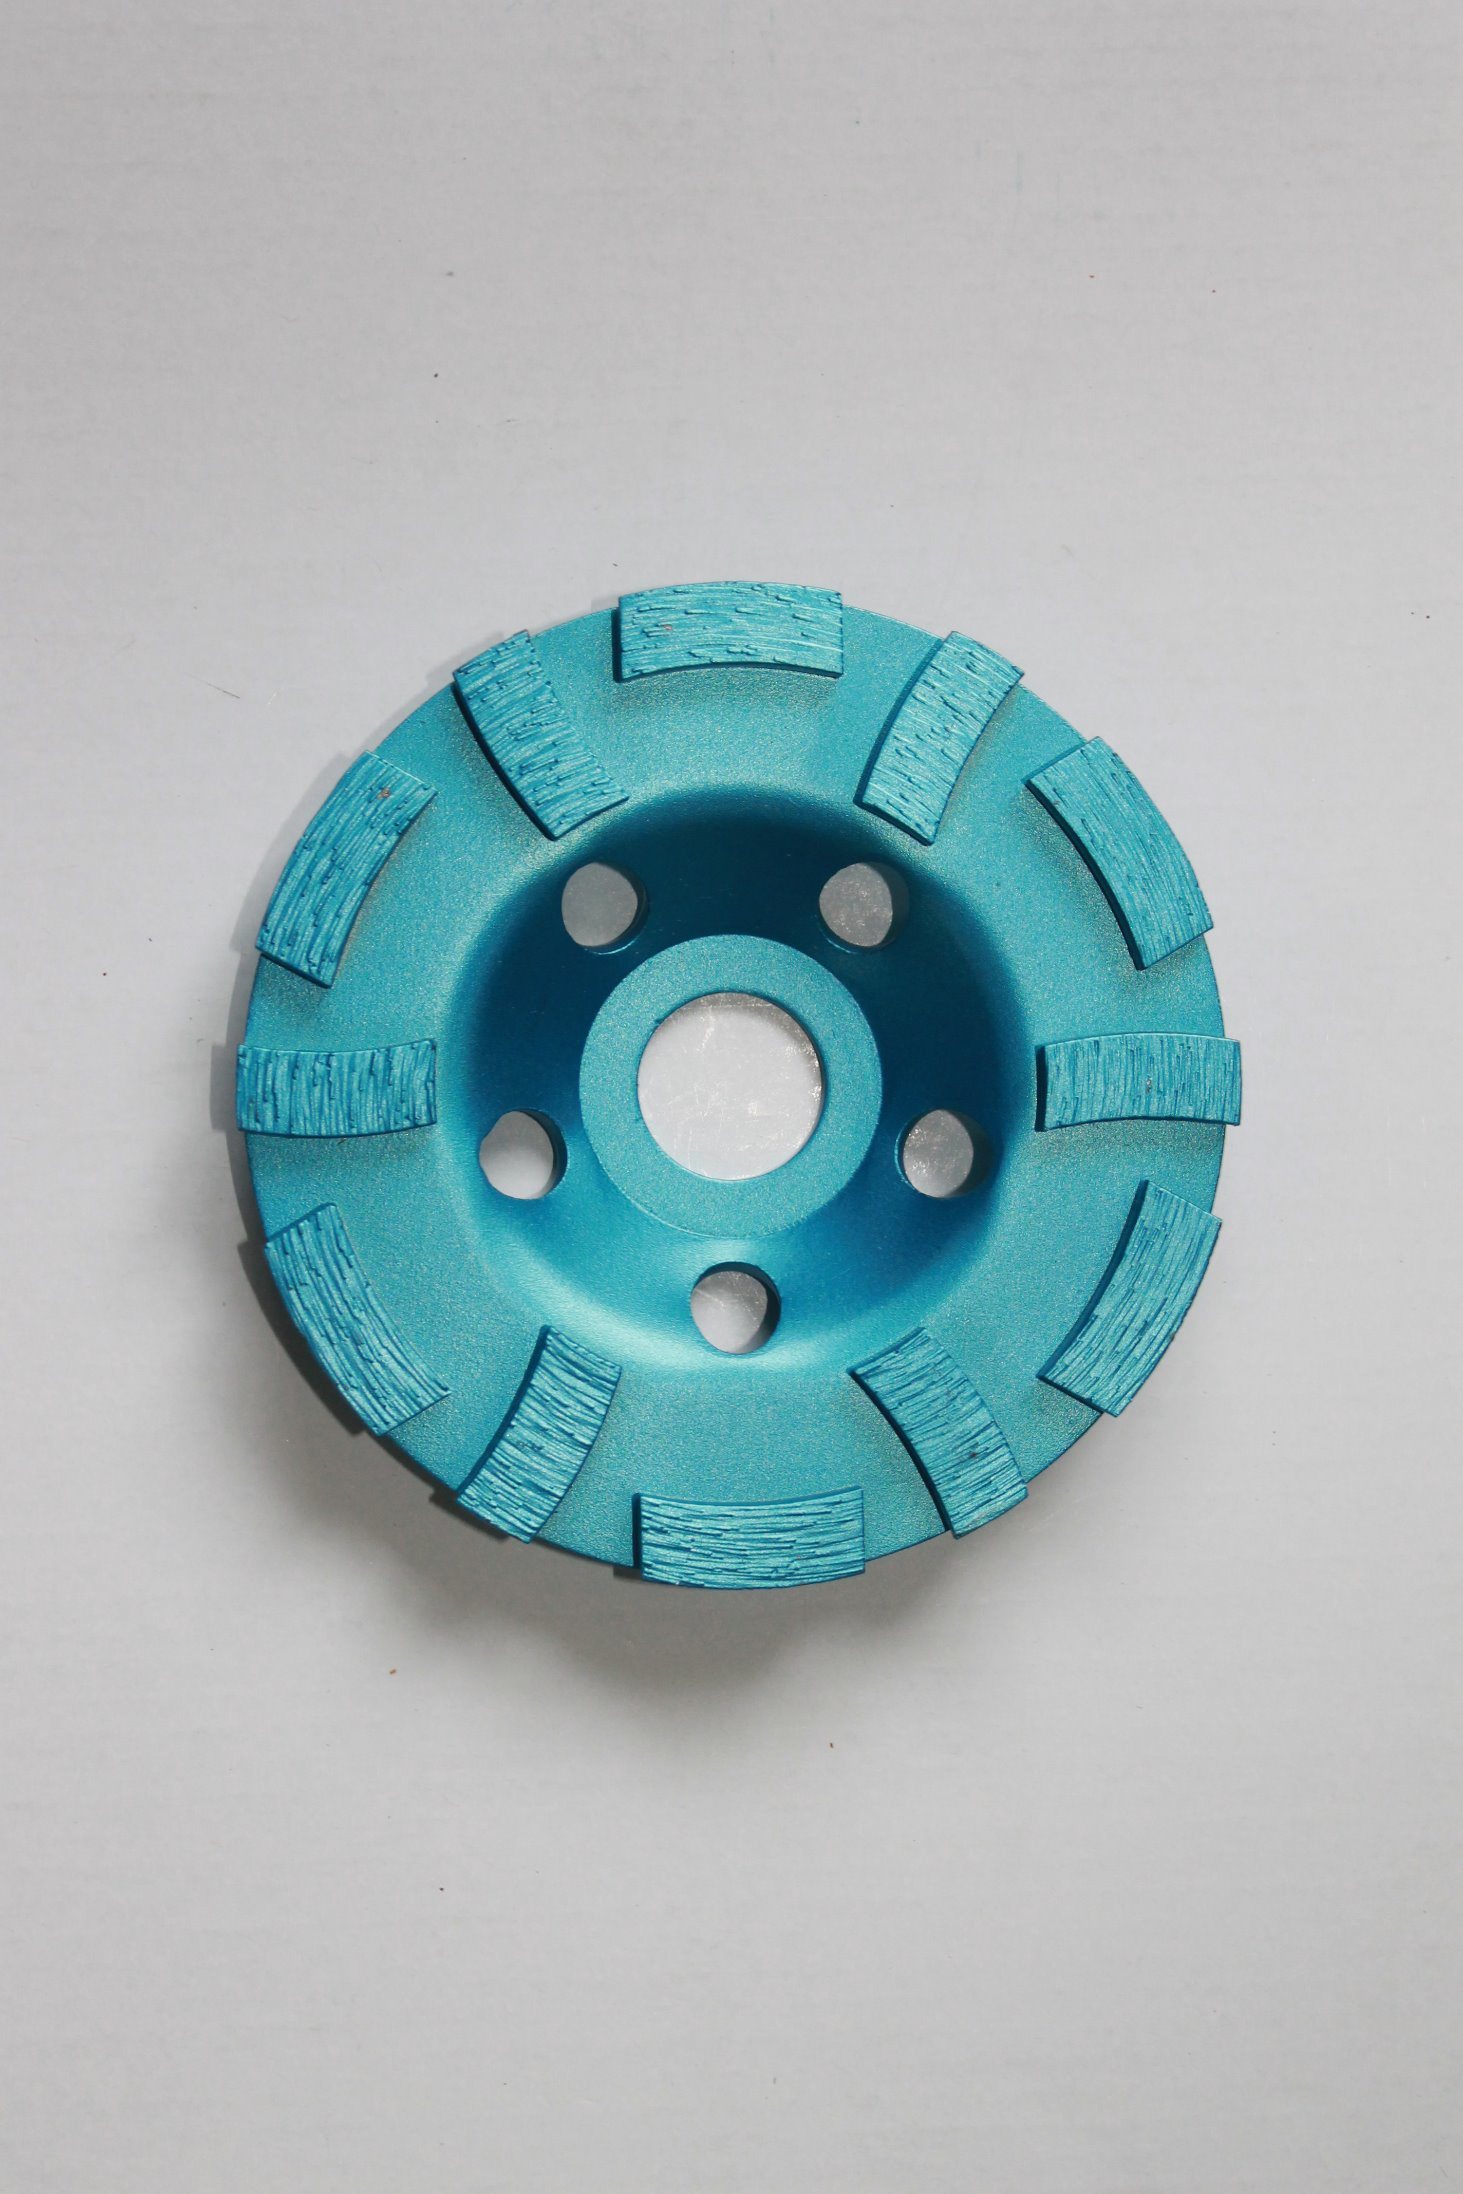 T Segment Diamond Grinding Cup Wheel (SED-GW-TS)